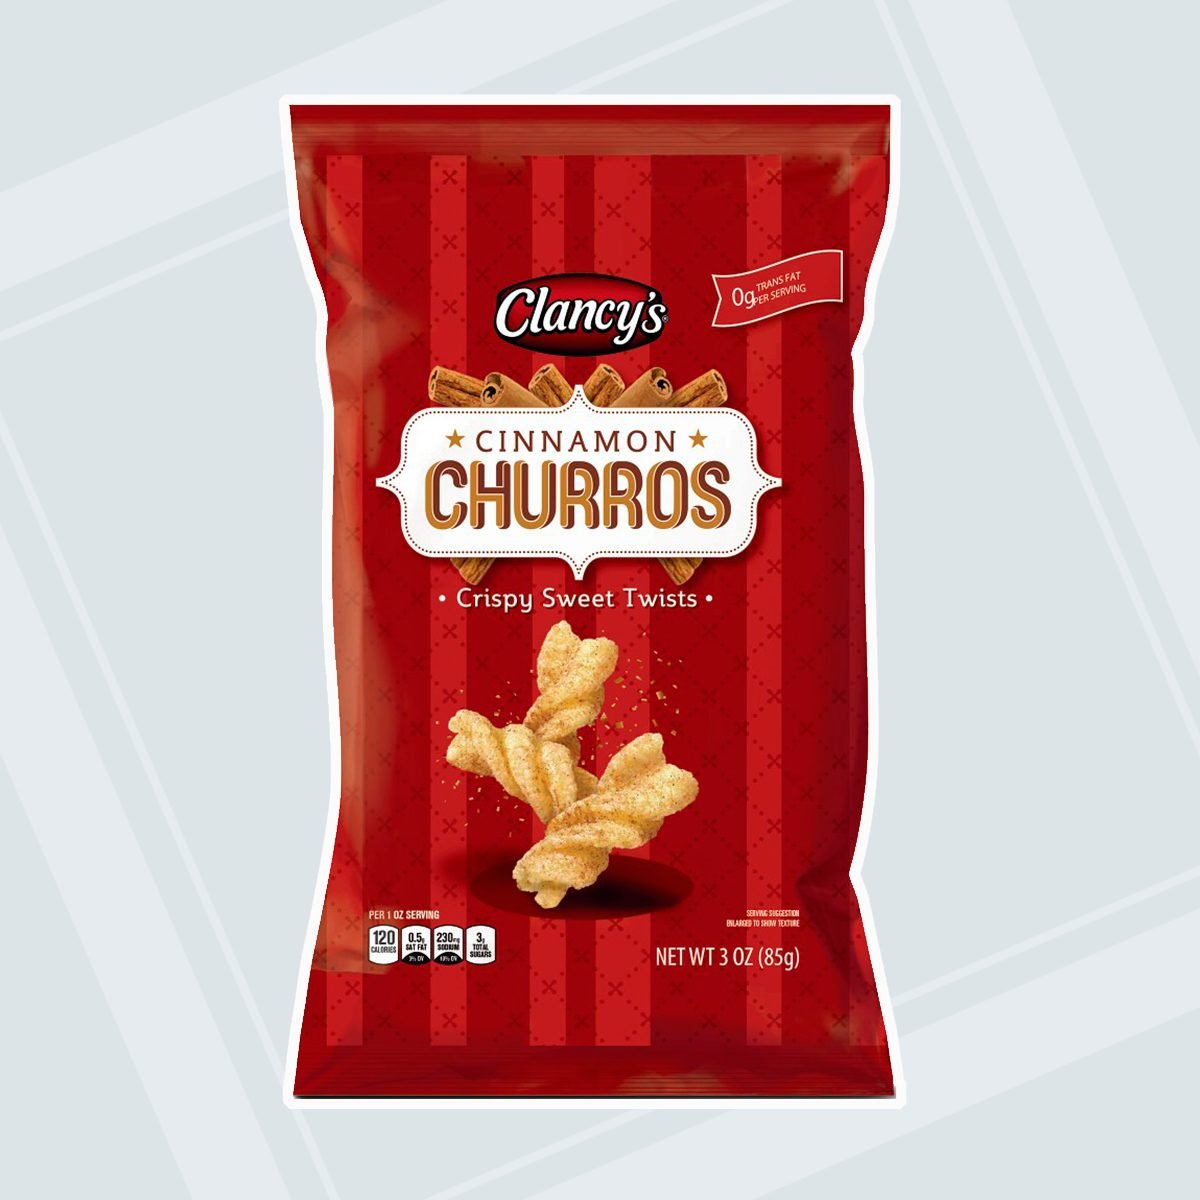 Clancy's Cinnamon Churros